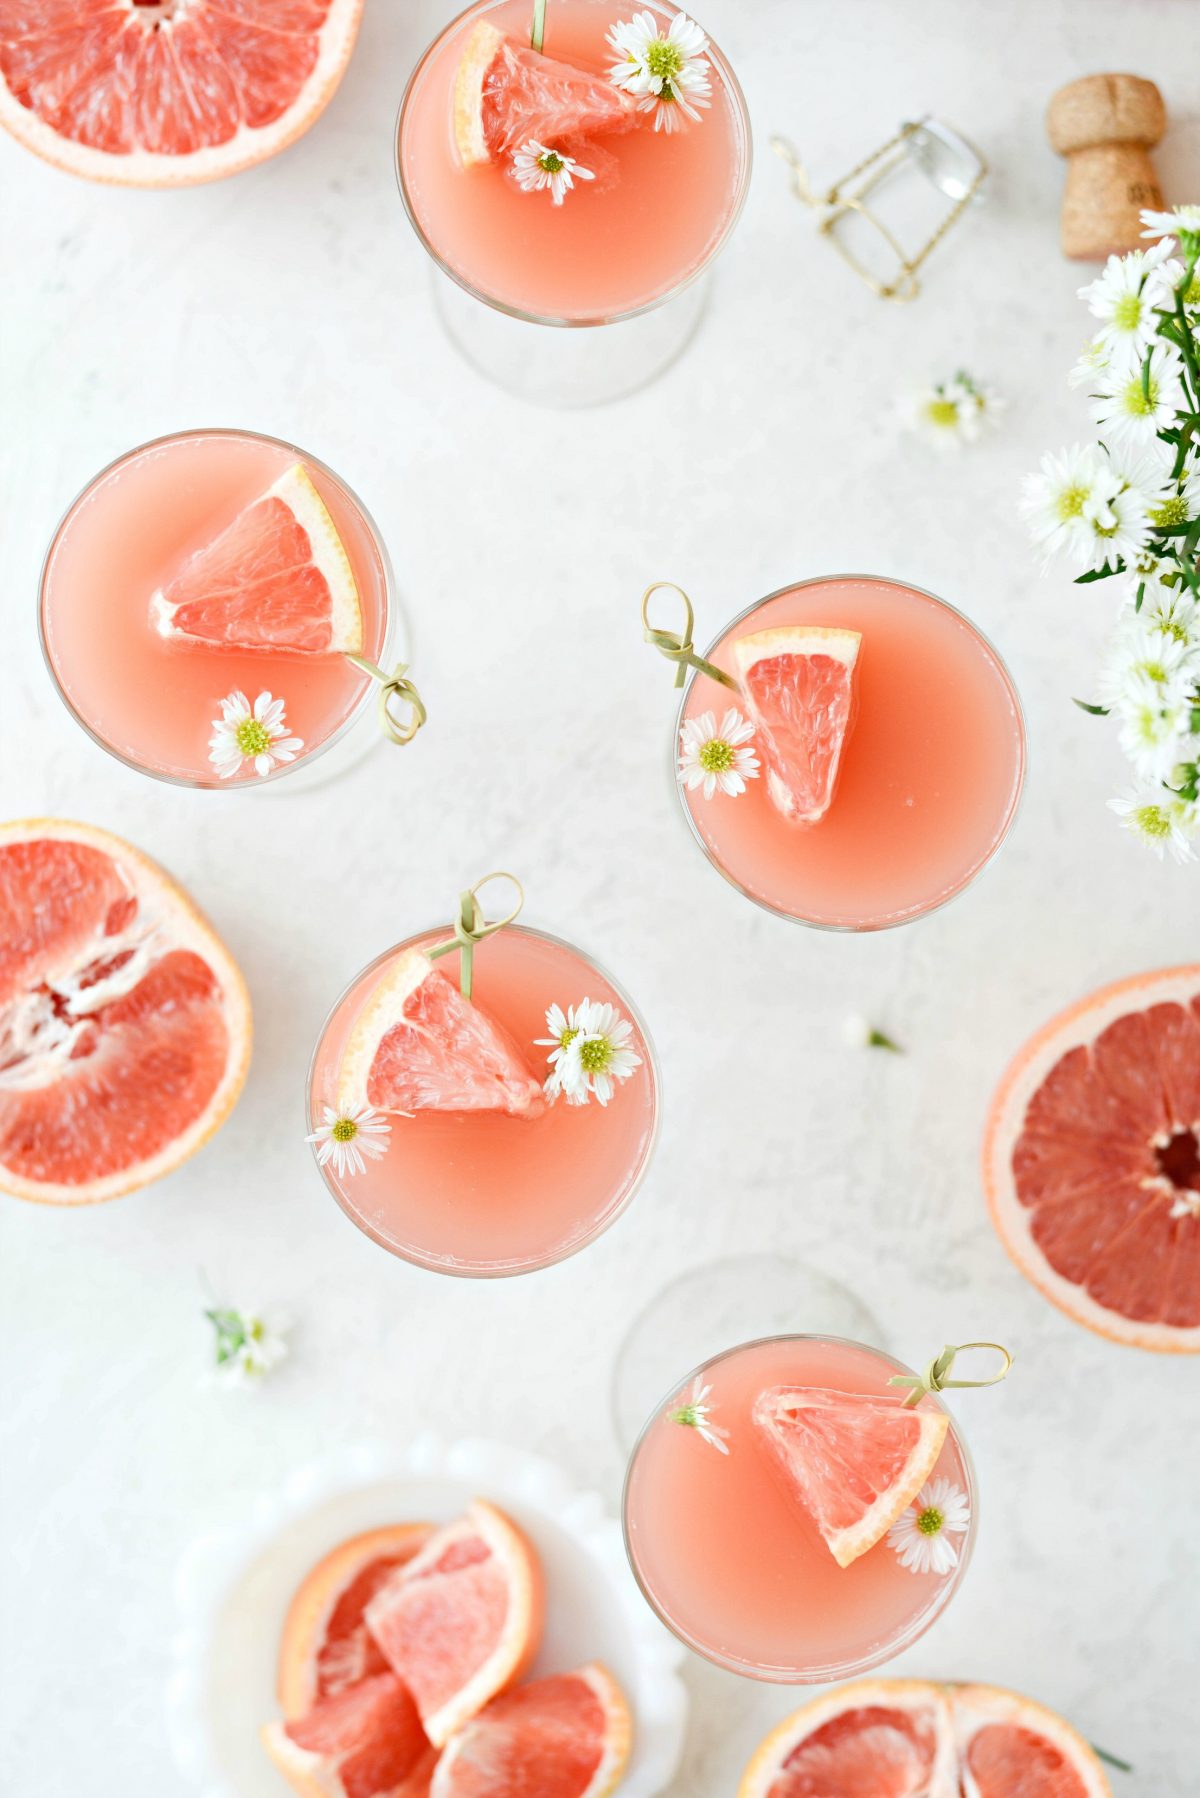 Greippirosé Mimosas l SimplyScratch.com #adult #beverage #greippi #rose #mimosa #easter #Brunssi #mothersday